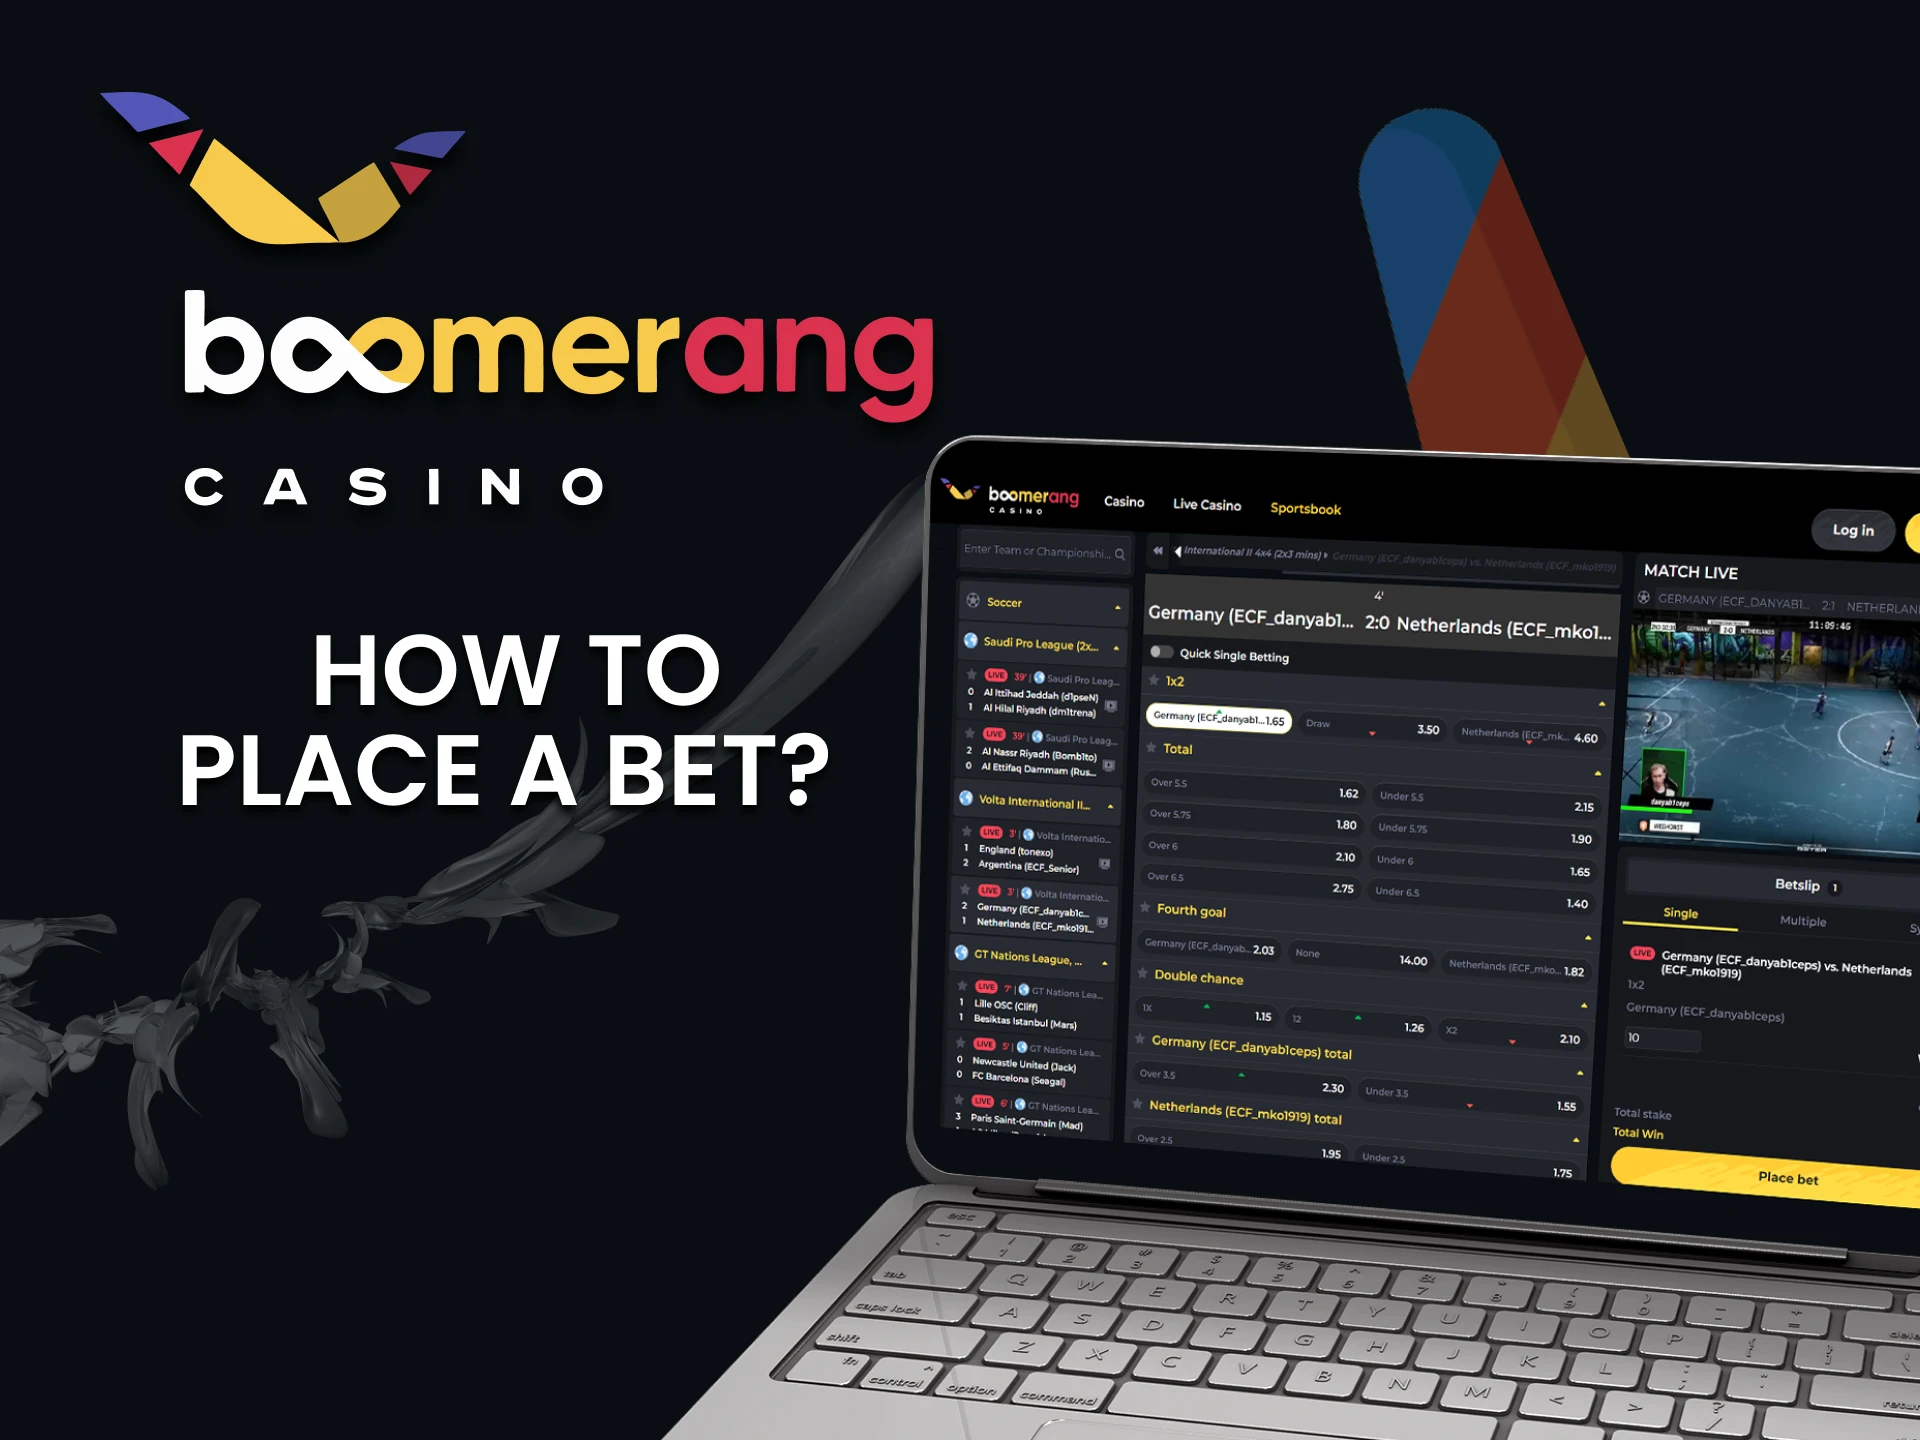 Start betting on sports from Boomerang Casino.